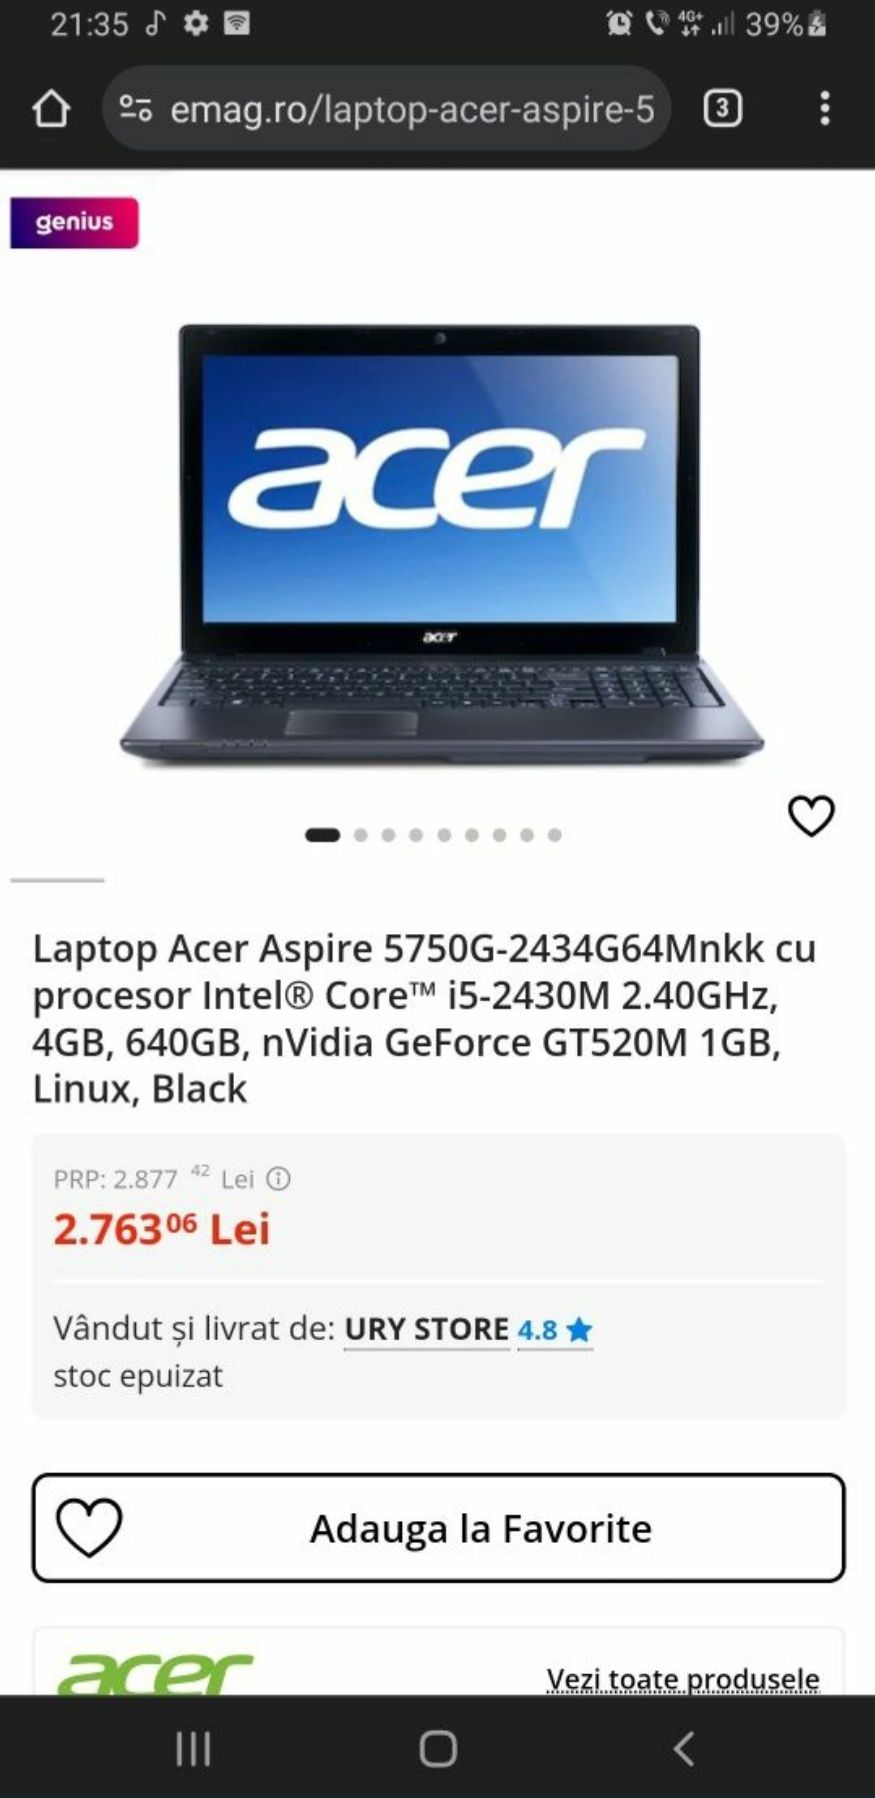 Vand Laptop Acer Aspire 5750g intel core i5